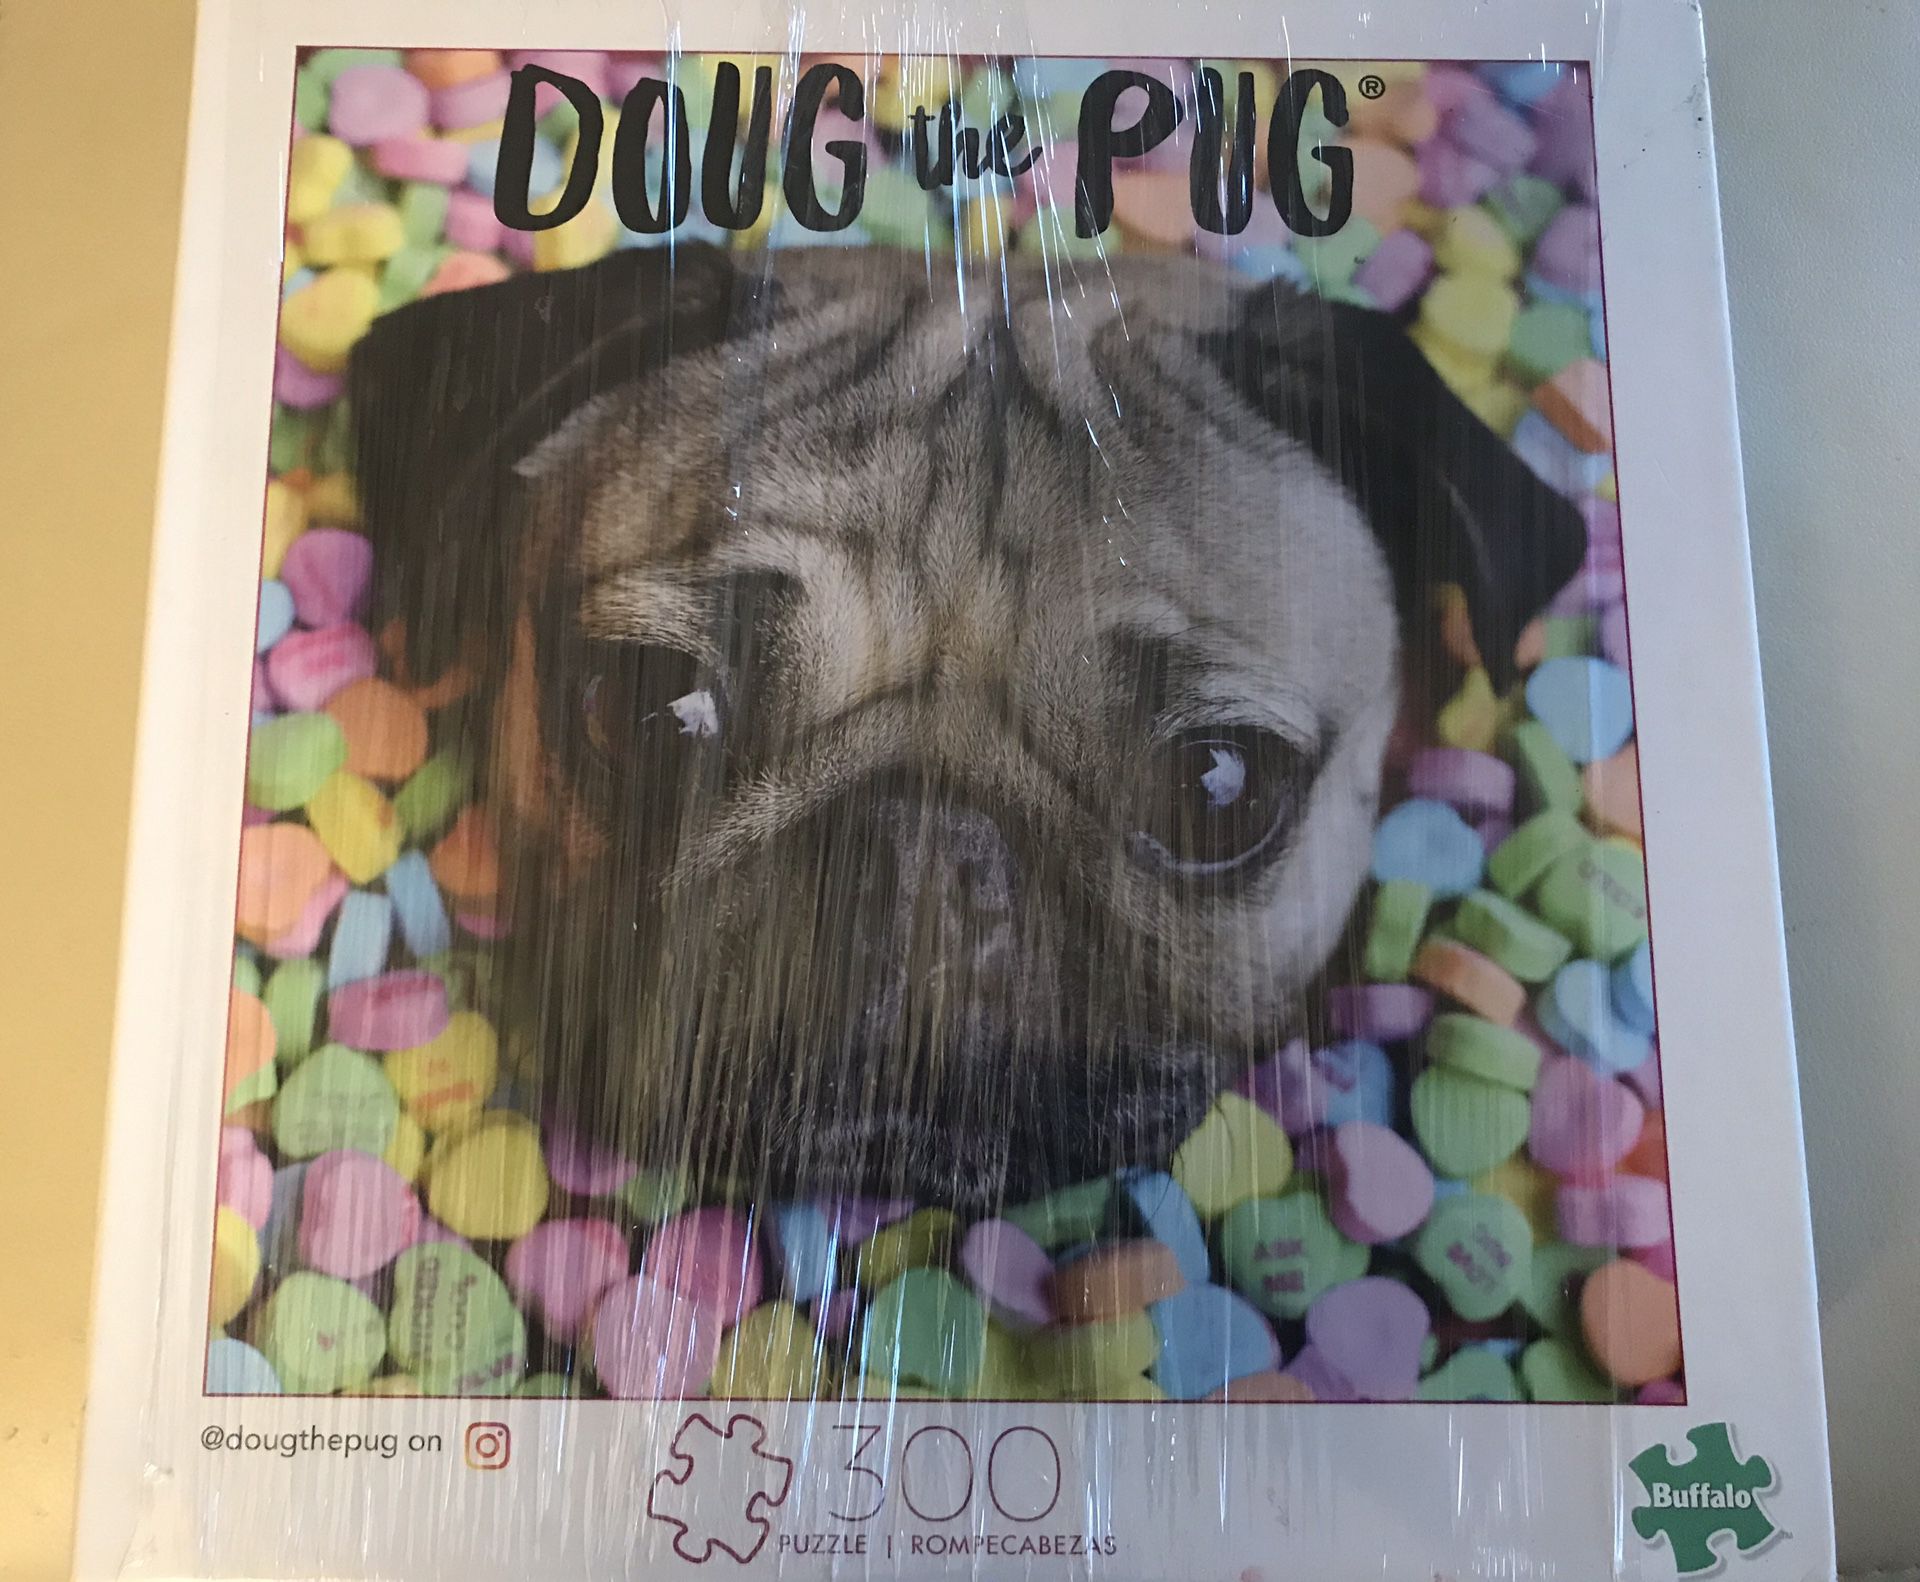 DOUG the PUG by Buffalo 300 pieces